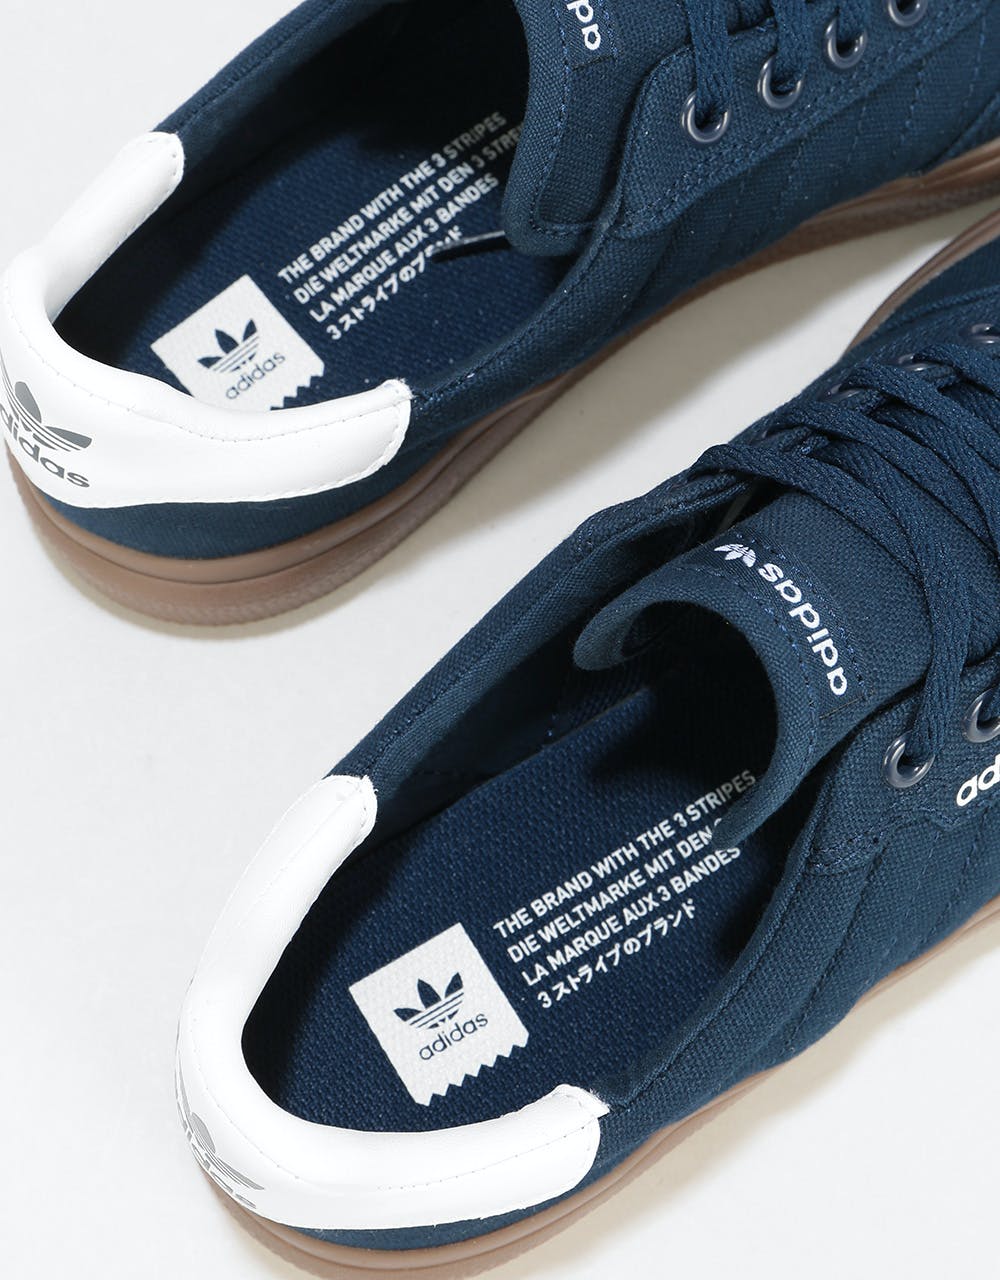 Adidas 3MC Skate Shoes - Collegiate Navy/White/Gum